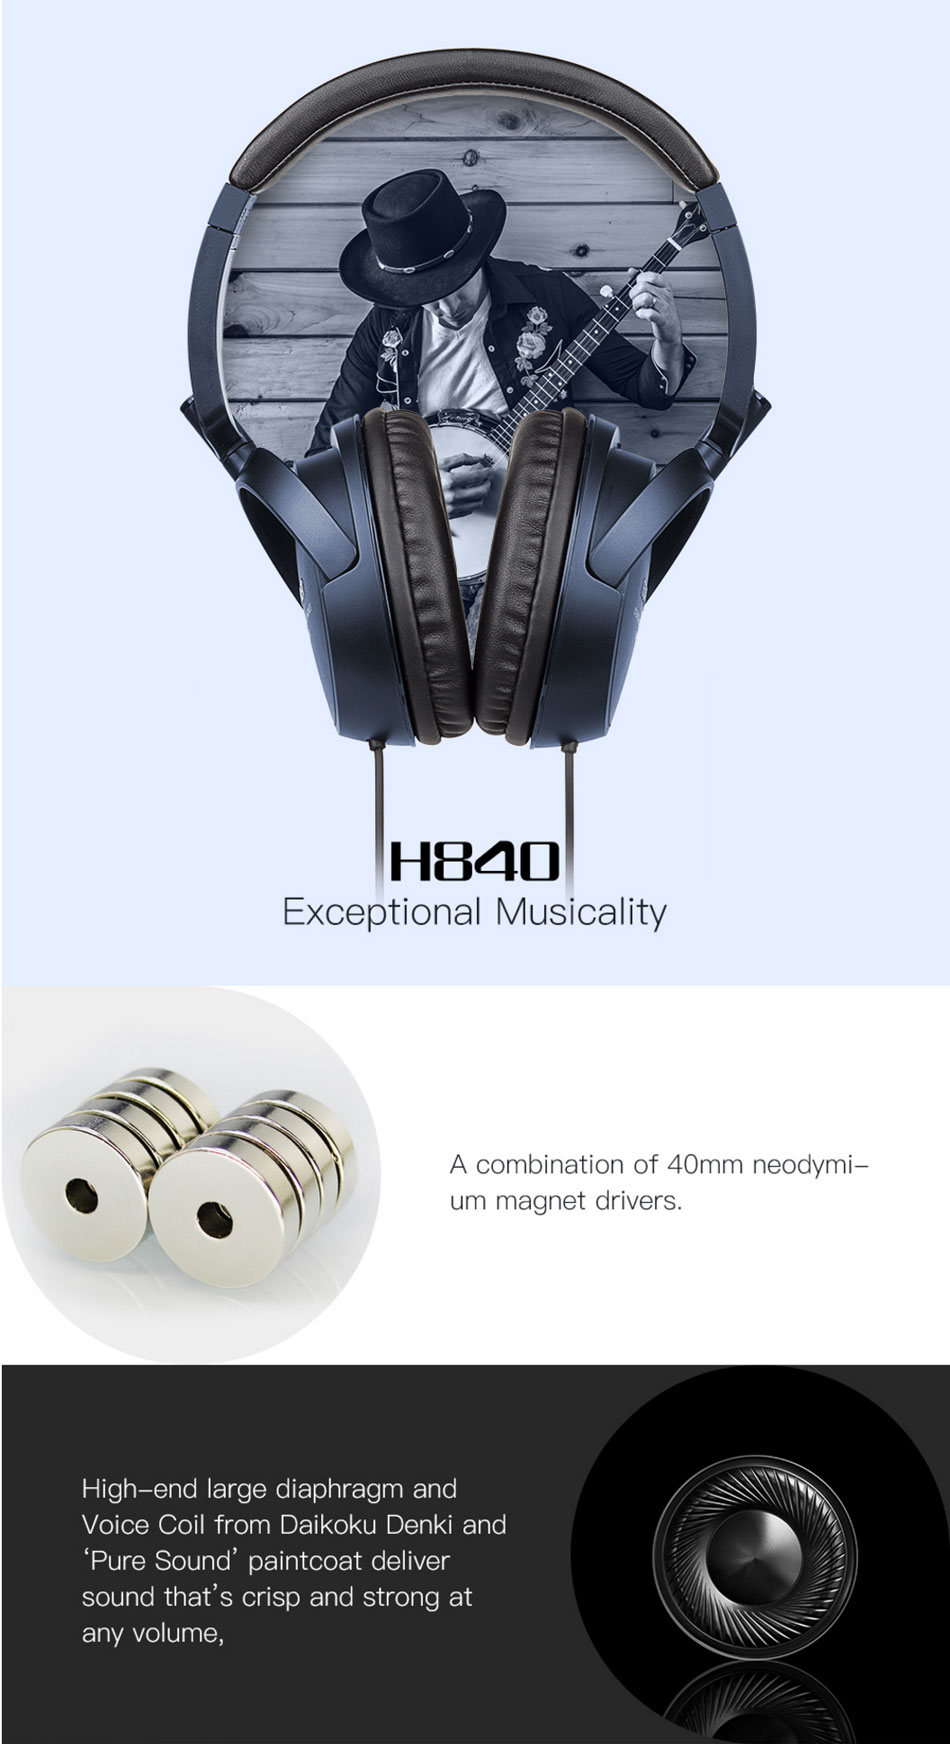 Edifier H840 Noise Cancelling Powerful Sound Ergonomic Ear Pads HIFI Headphone Headset 3.5mm AUX 39